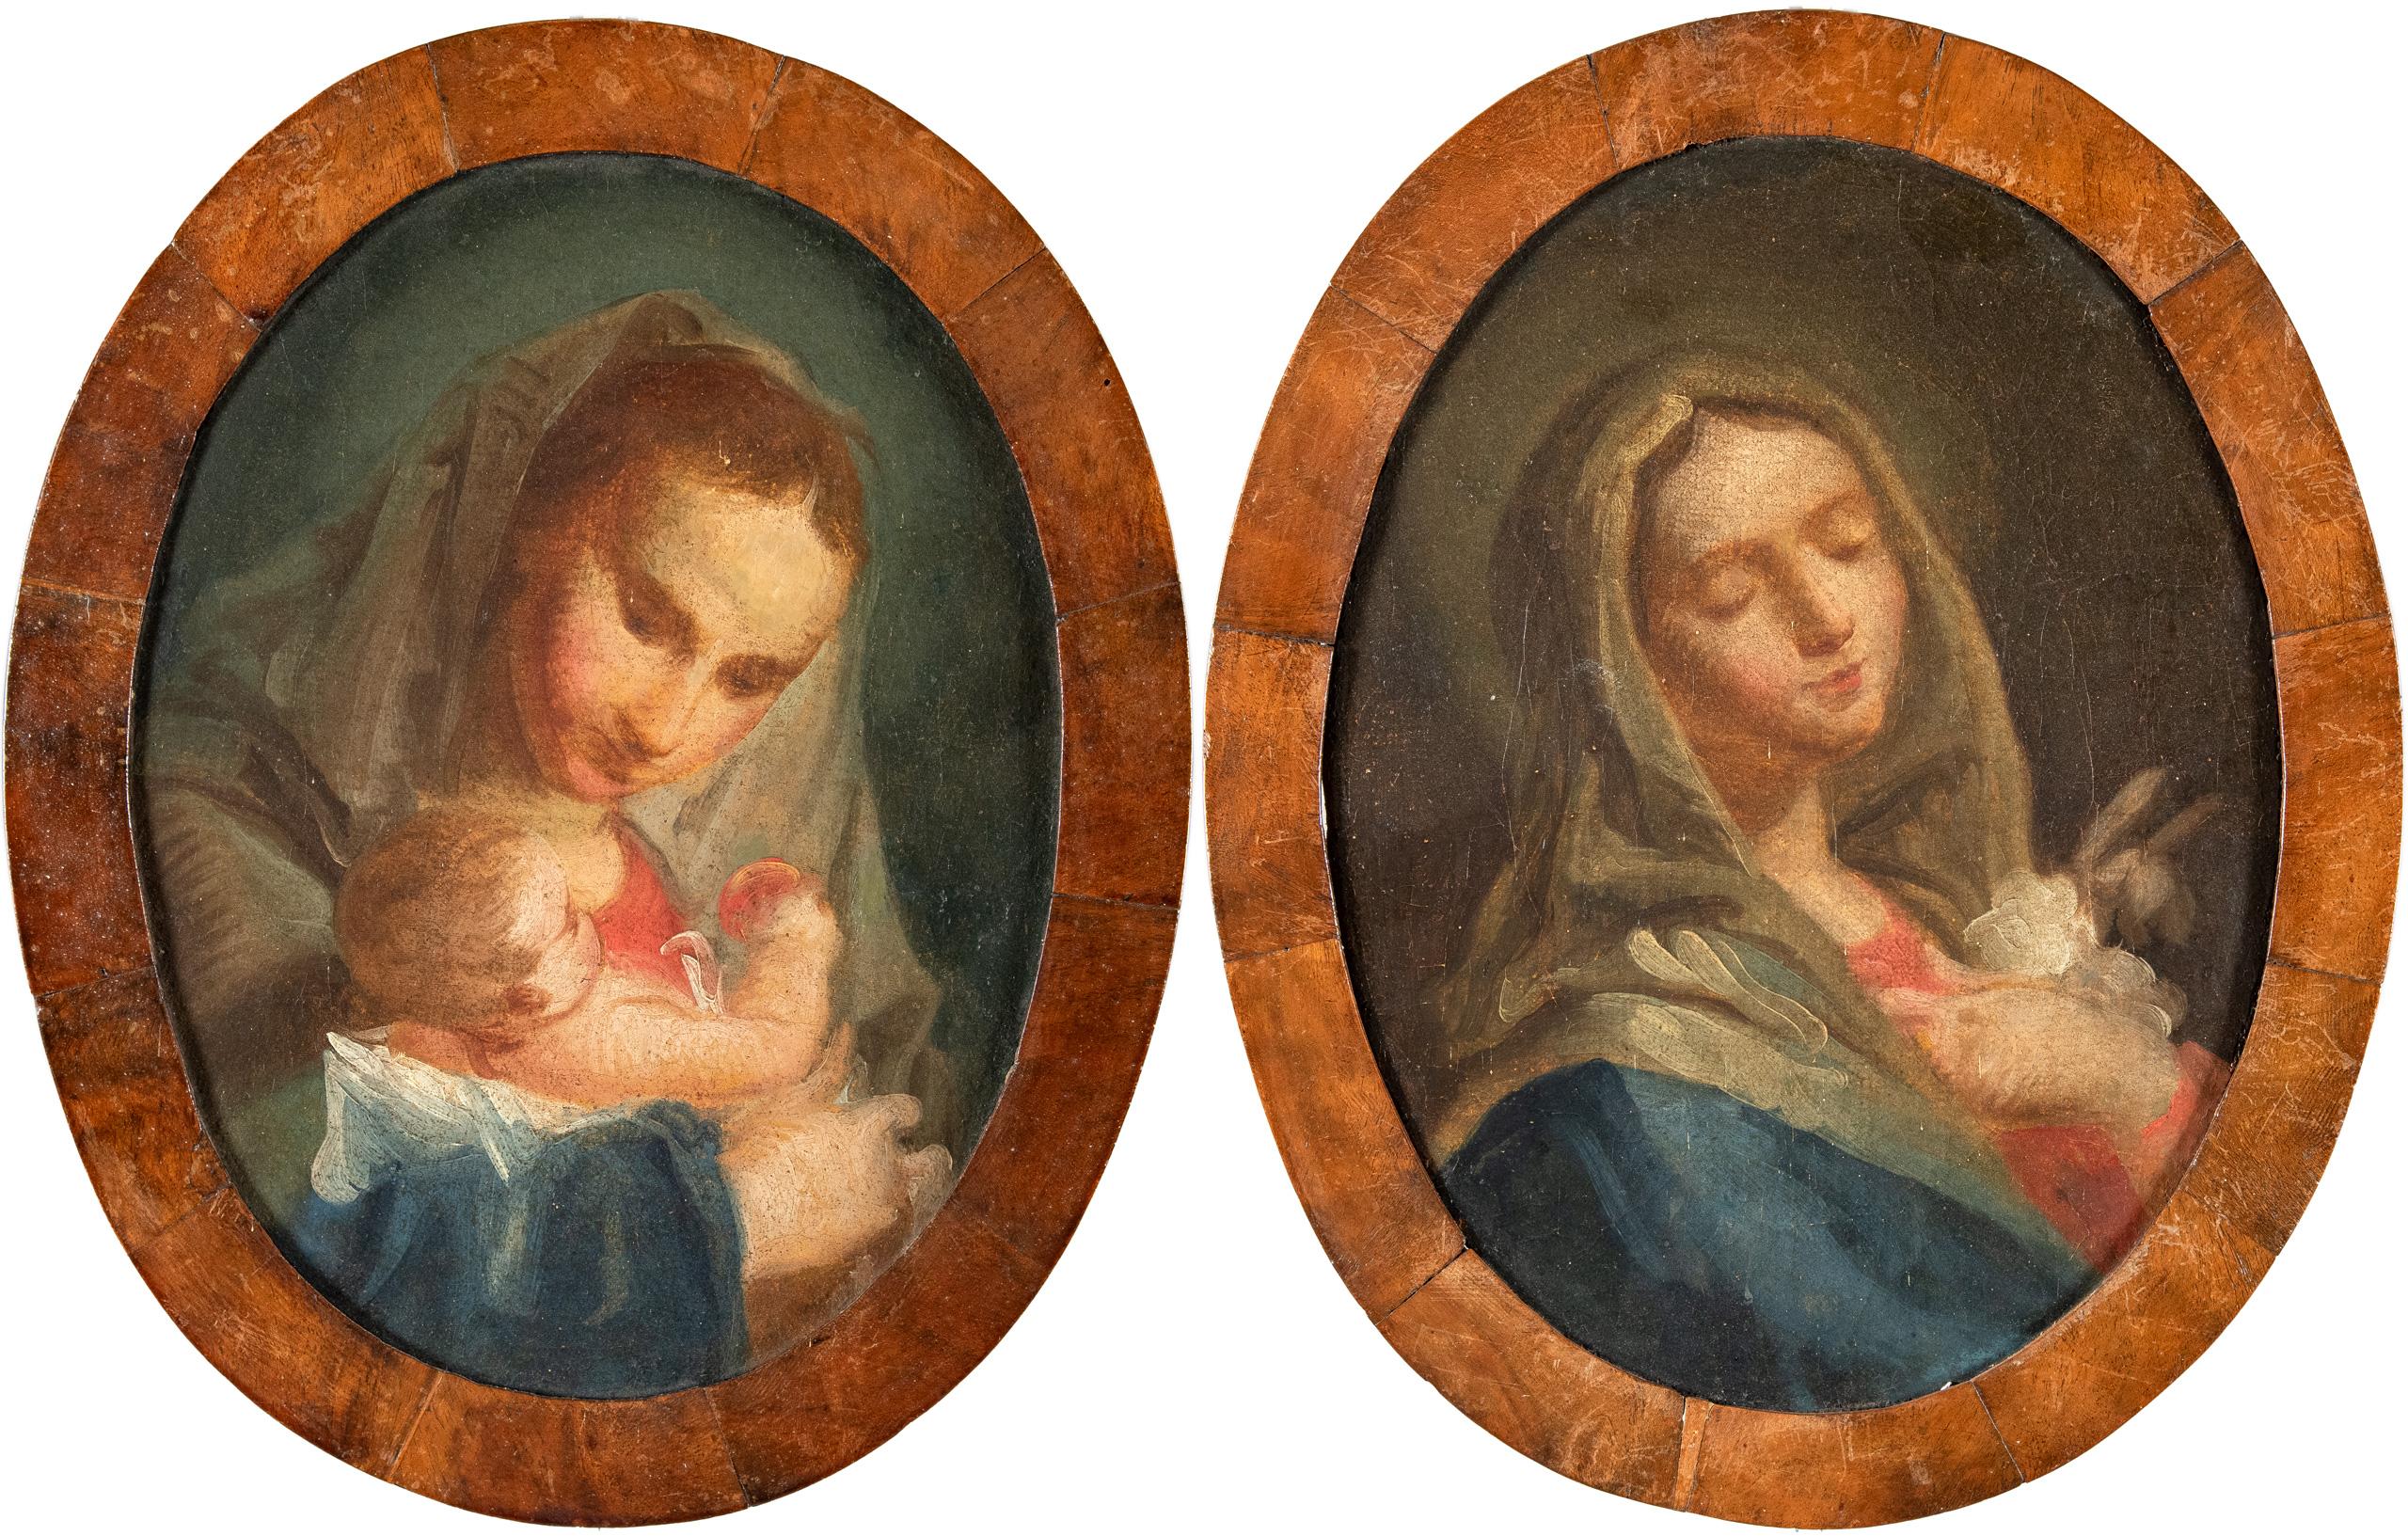 Pair of 18th century Venetian figure paintings - Virgin Child - Oil on canvas 